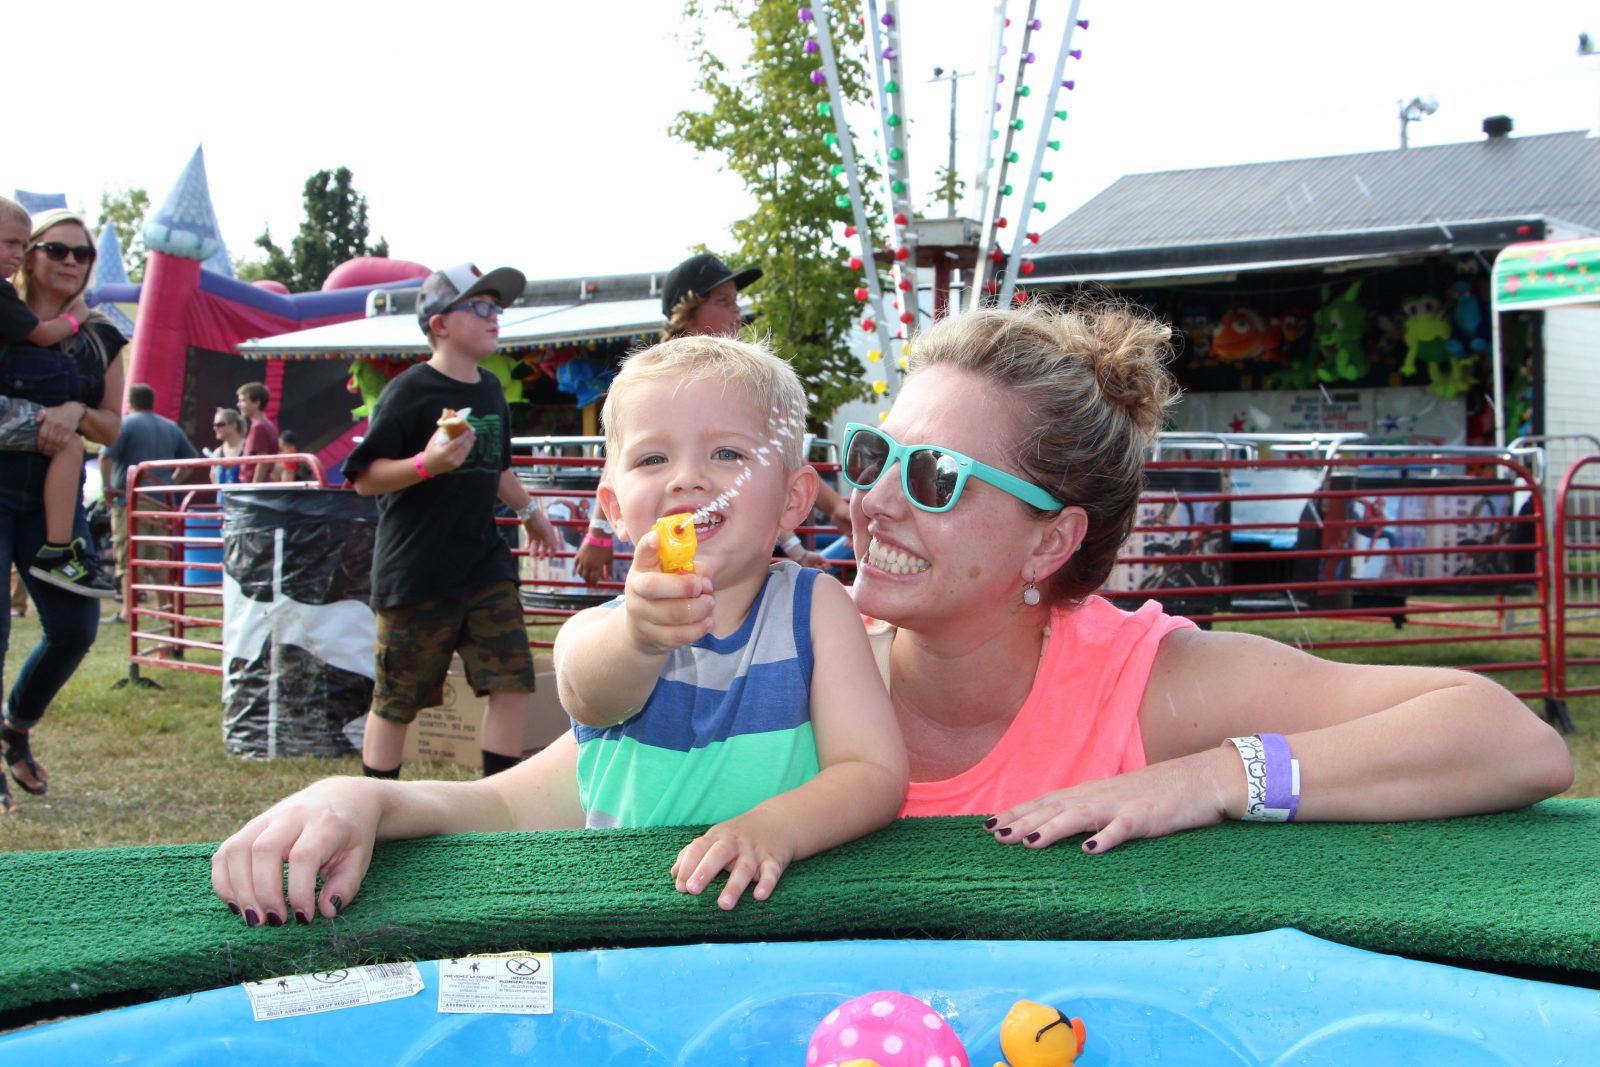 Stormont County Fair: ‘Summer’s last hurrah’